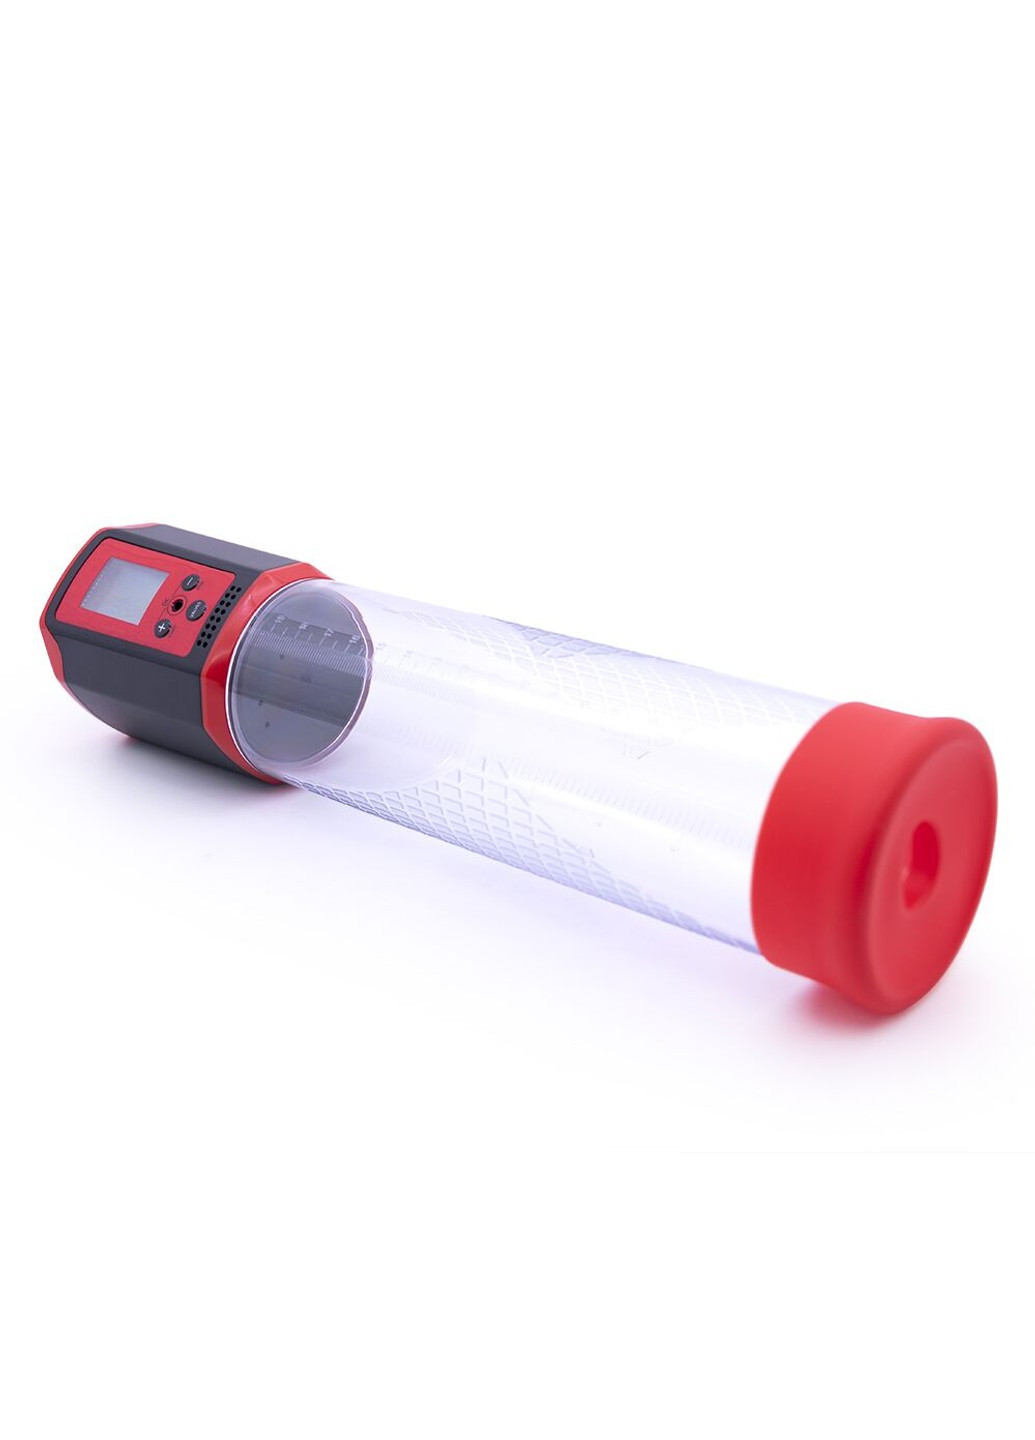 Автоматична вакуумна помпа Passion Pump Red, LED-табло, перезаряджувана, 8 режимів Men Powerup (258261906)